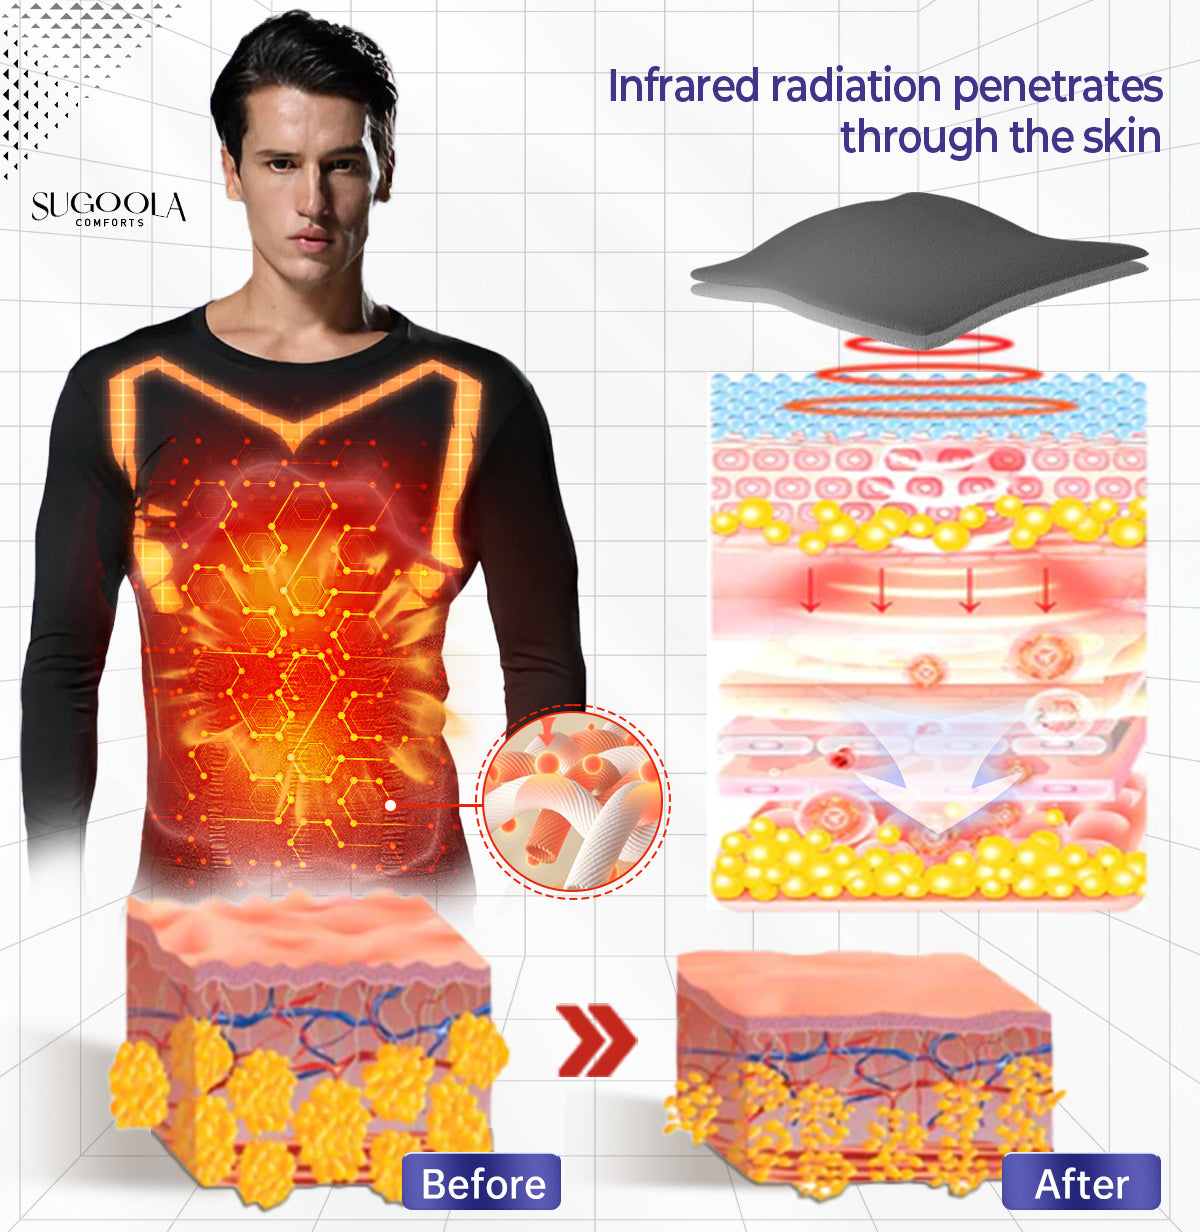 🦾Sugoola™ Far-Infrared Tourmaline Magnetic Mens Undershirt